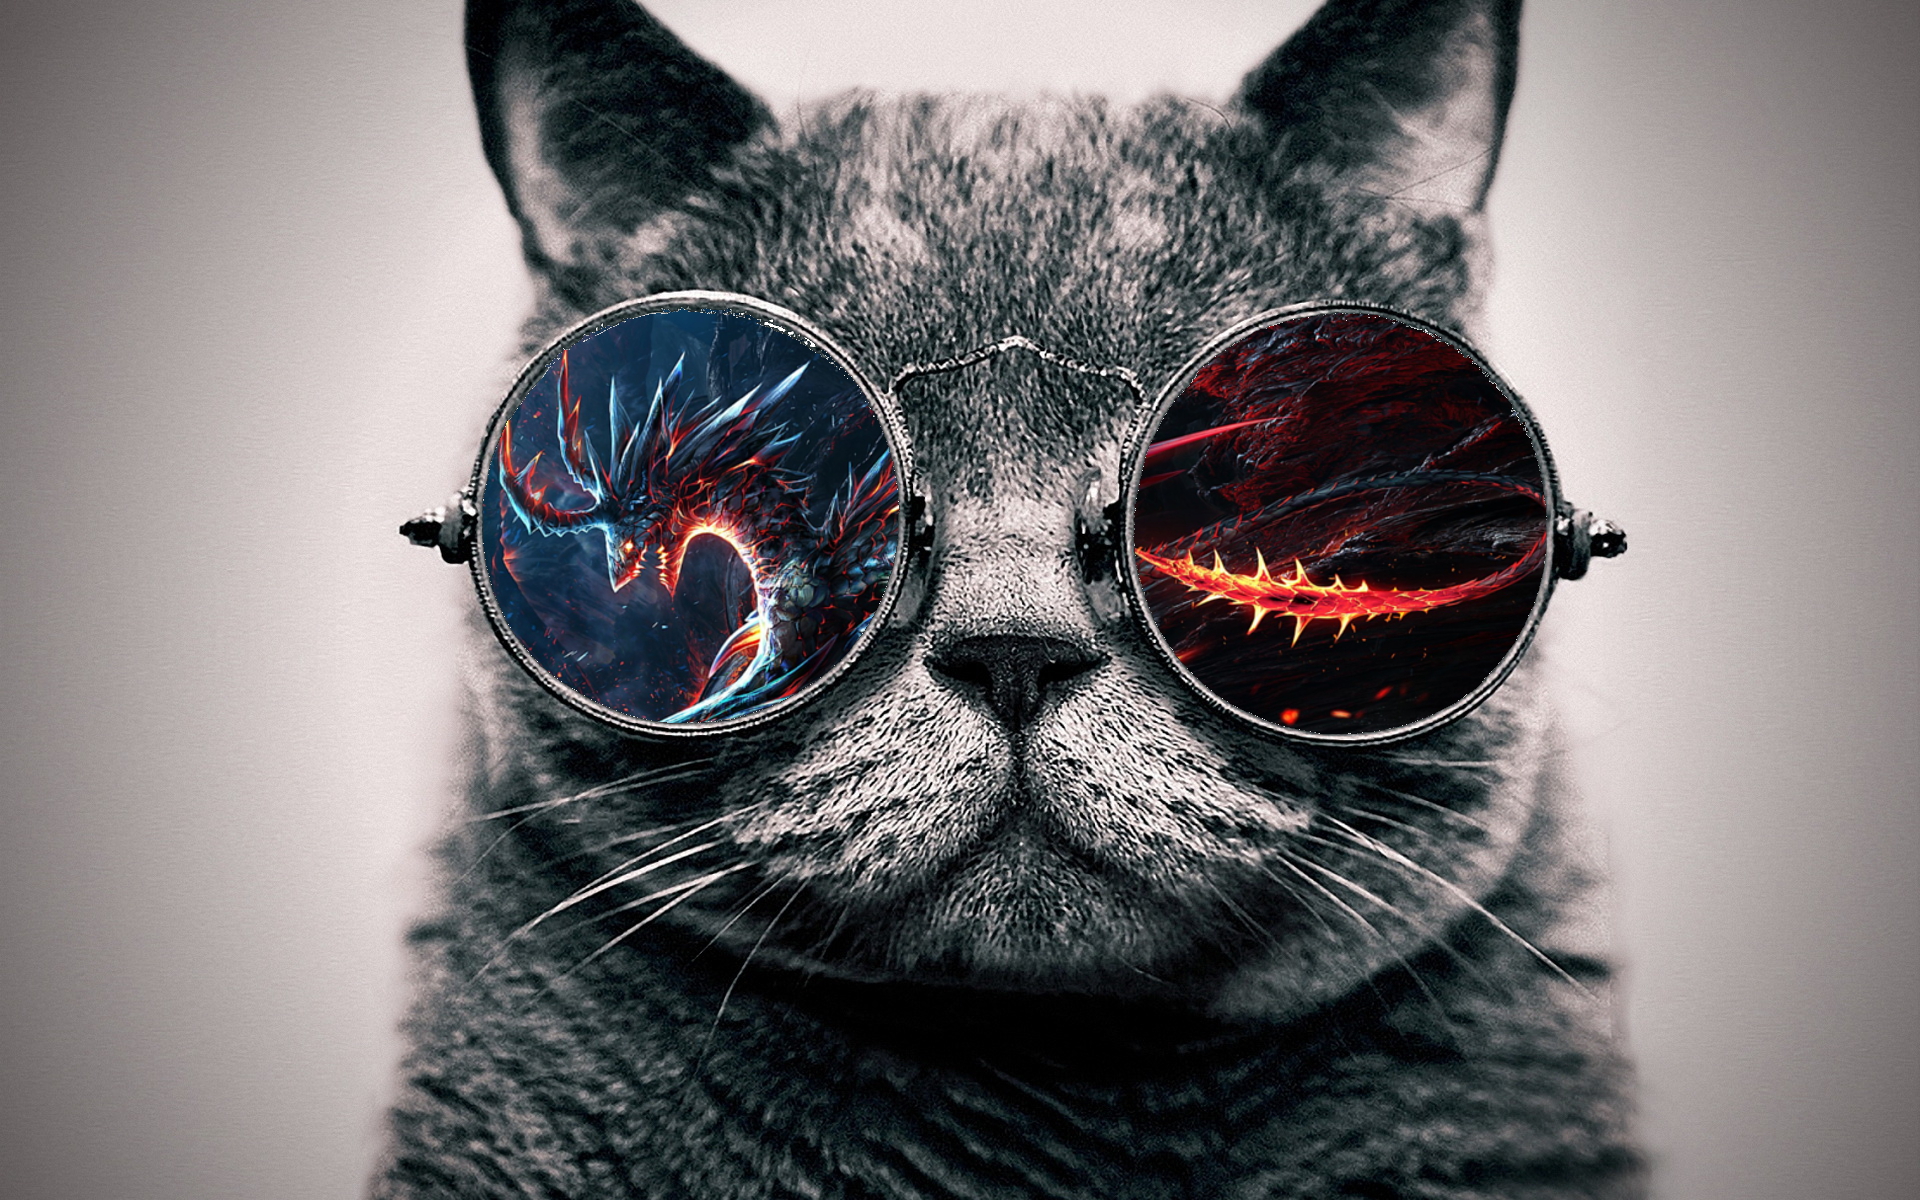 https://orig01.deviantart.net/6d5e/f/2015/225/5/b/cool_cat__dragon_by_tovalhalla-d95i6cw.jpg